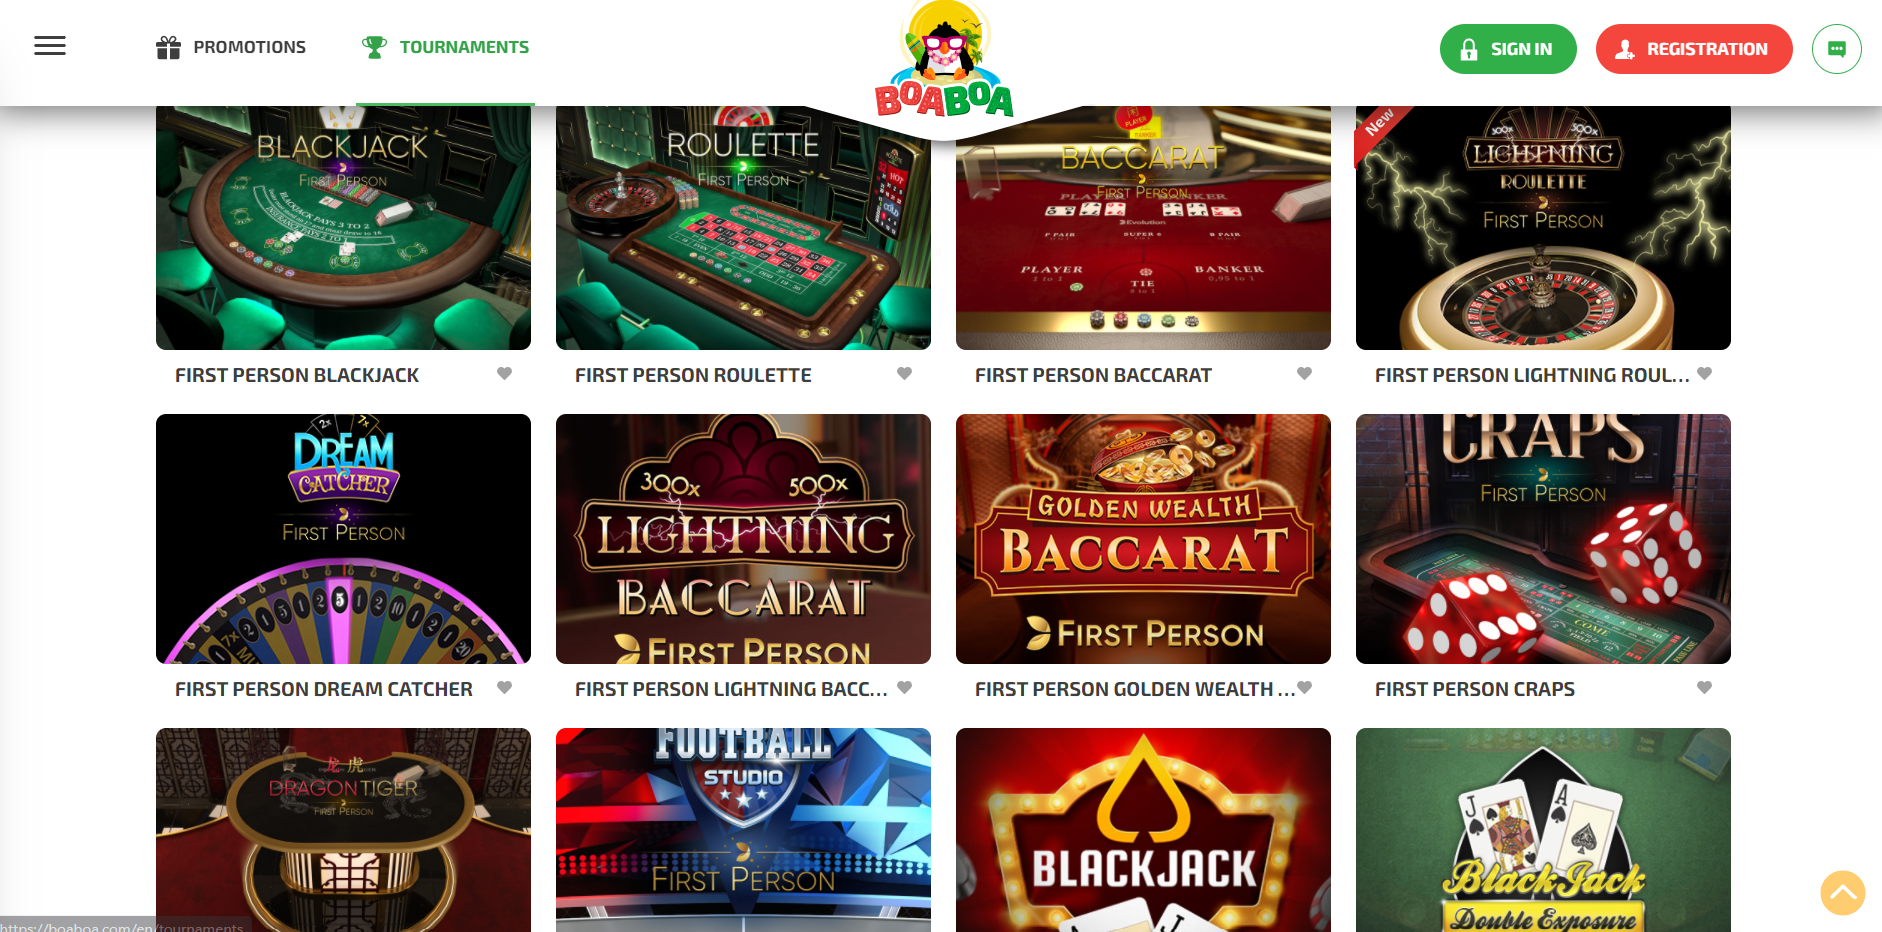 BoaBoa Casino's VIP Program: Is it Worth the Investment?